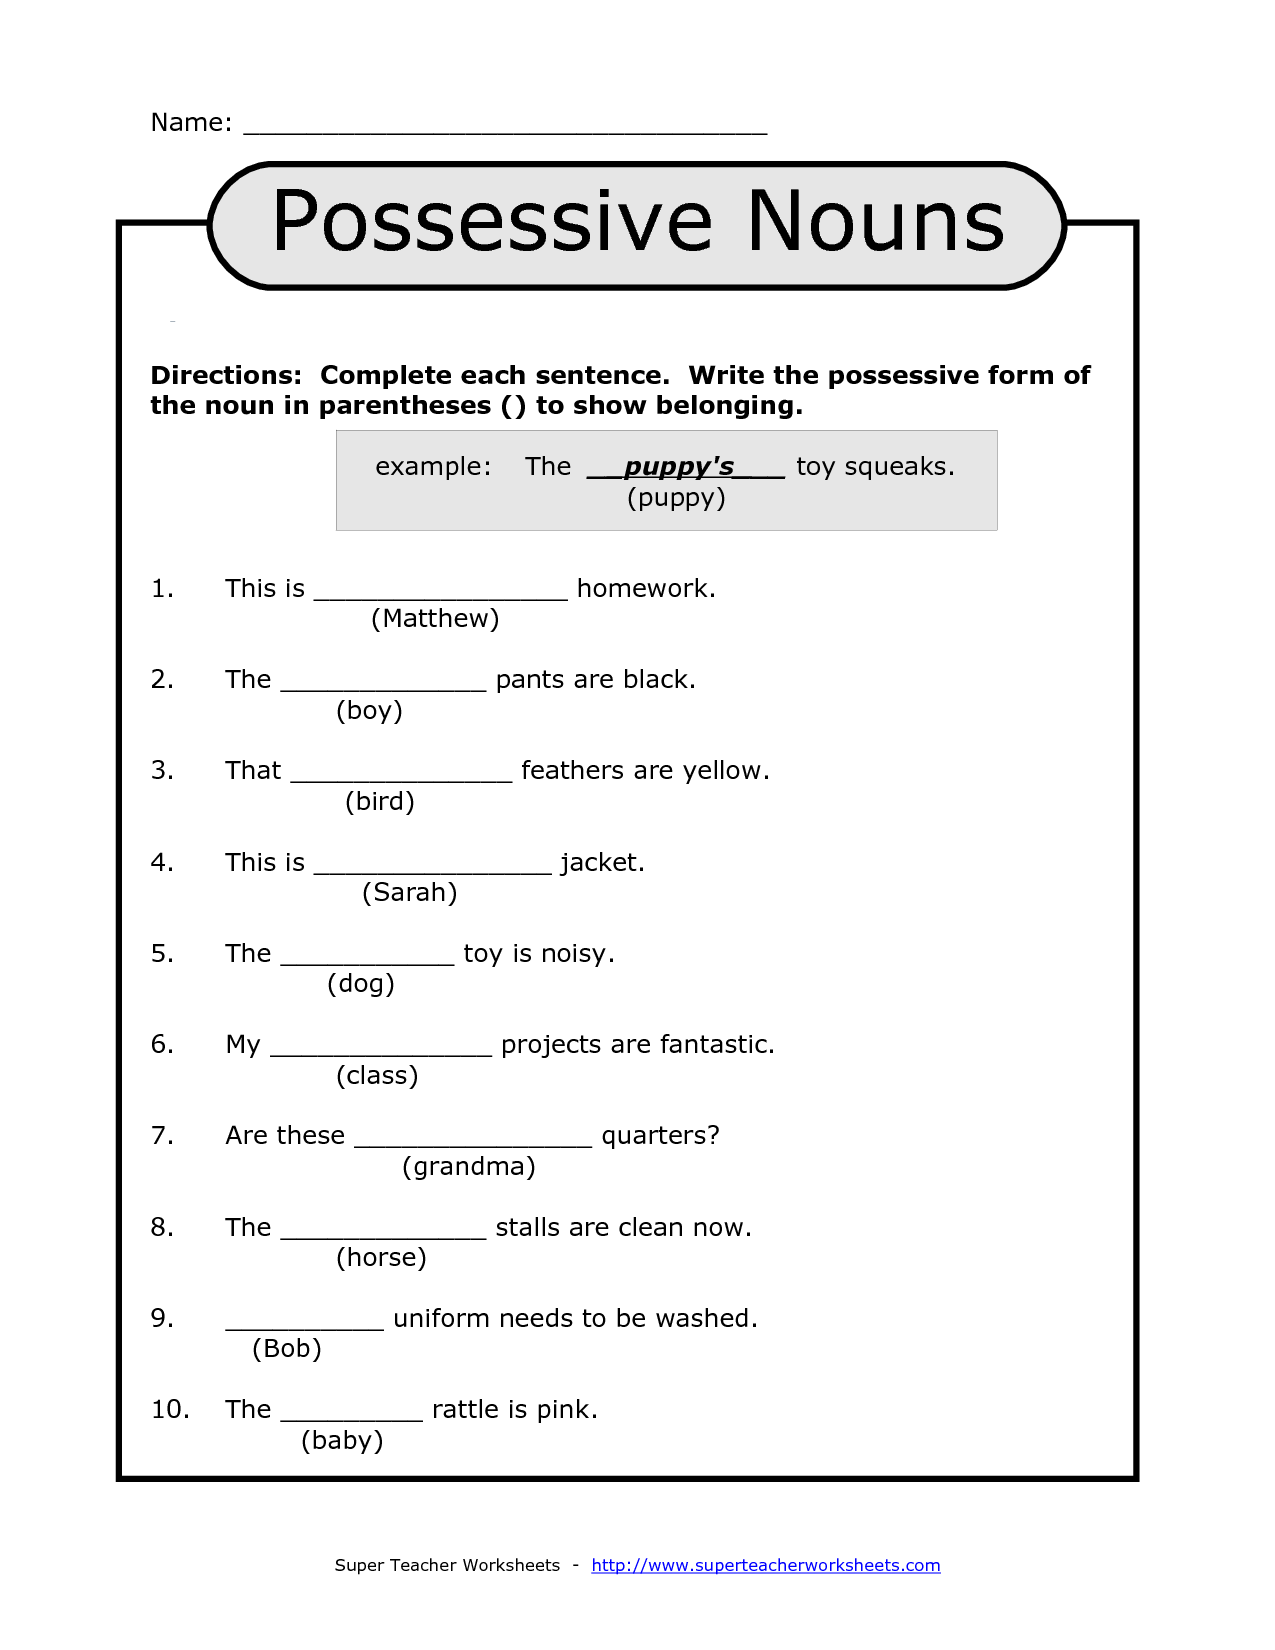 possessive-nouns-worksheets-419